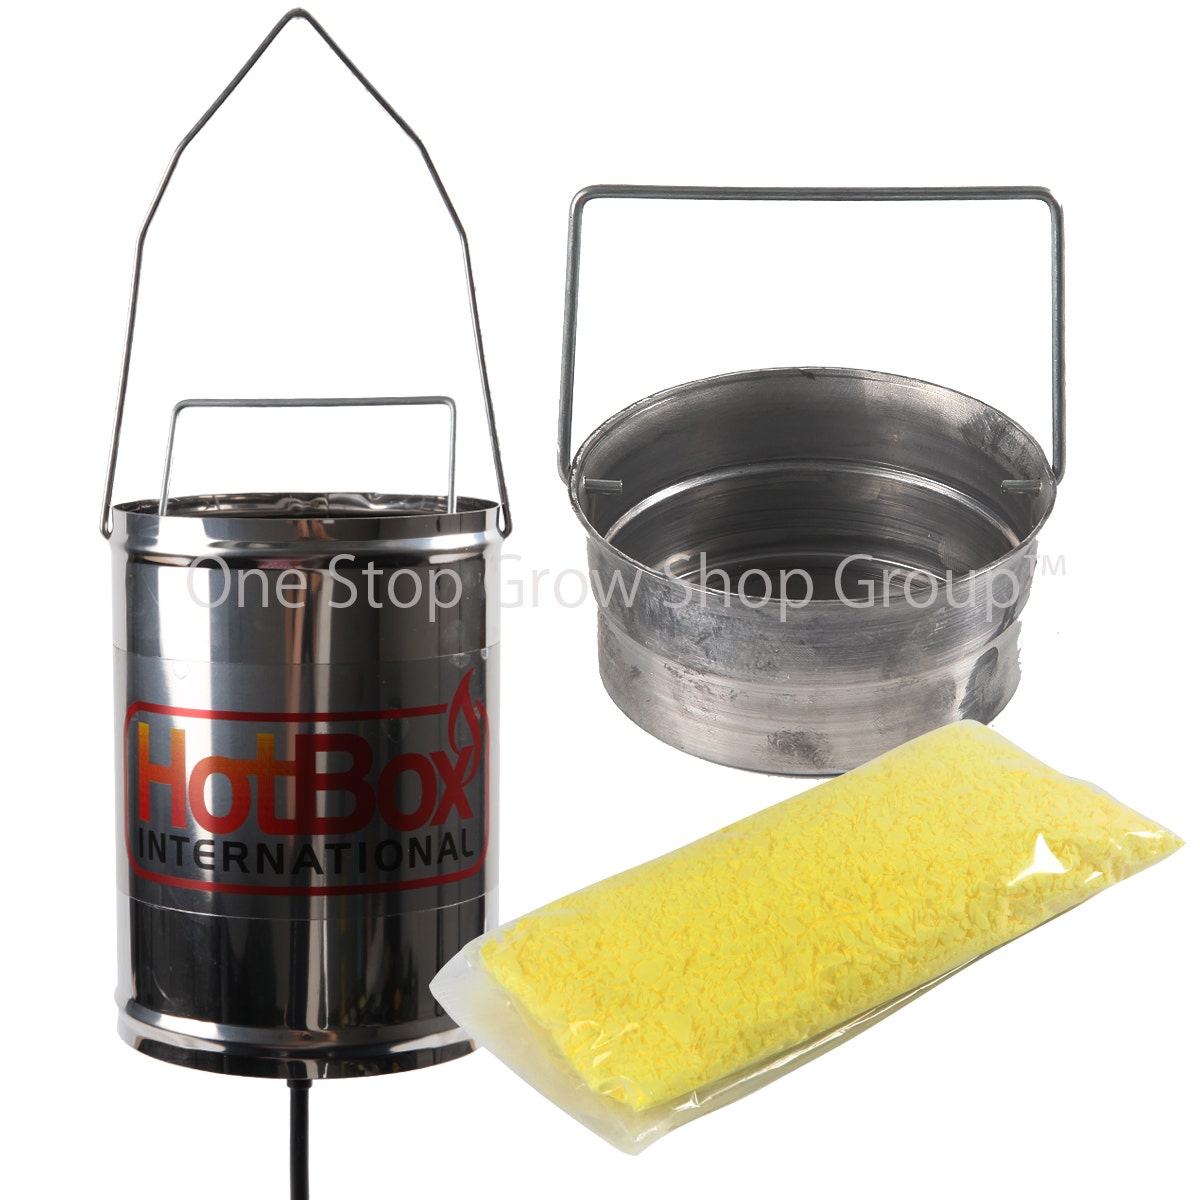 Hotbox Sulfume Sulphur Vapouriser With Sulphur Powder